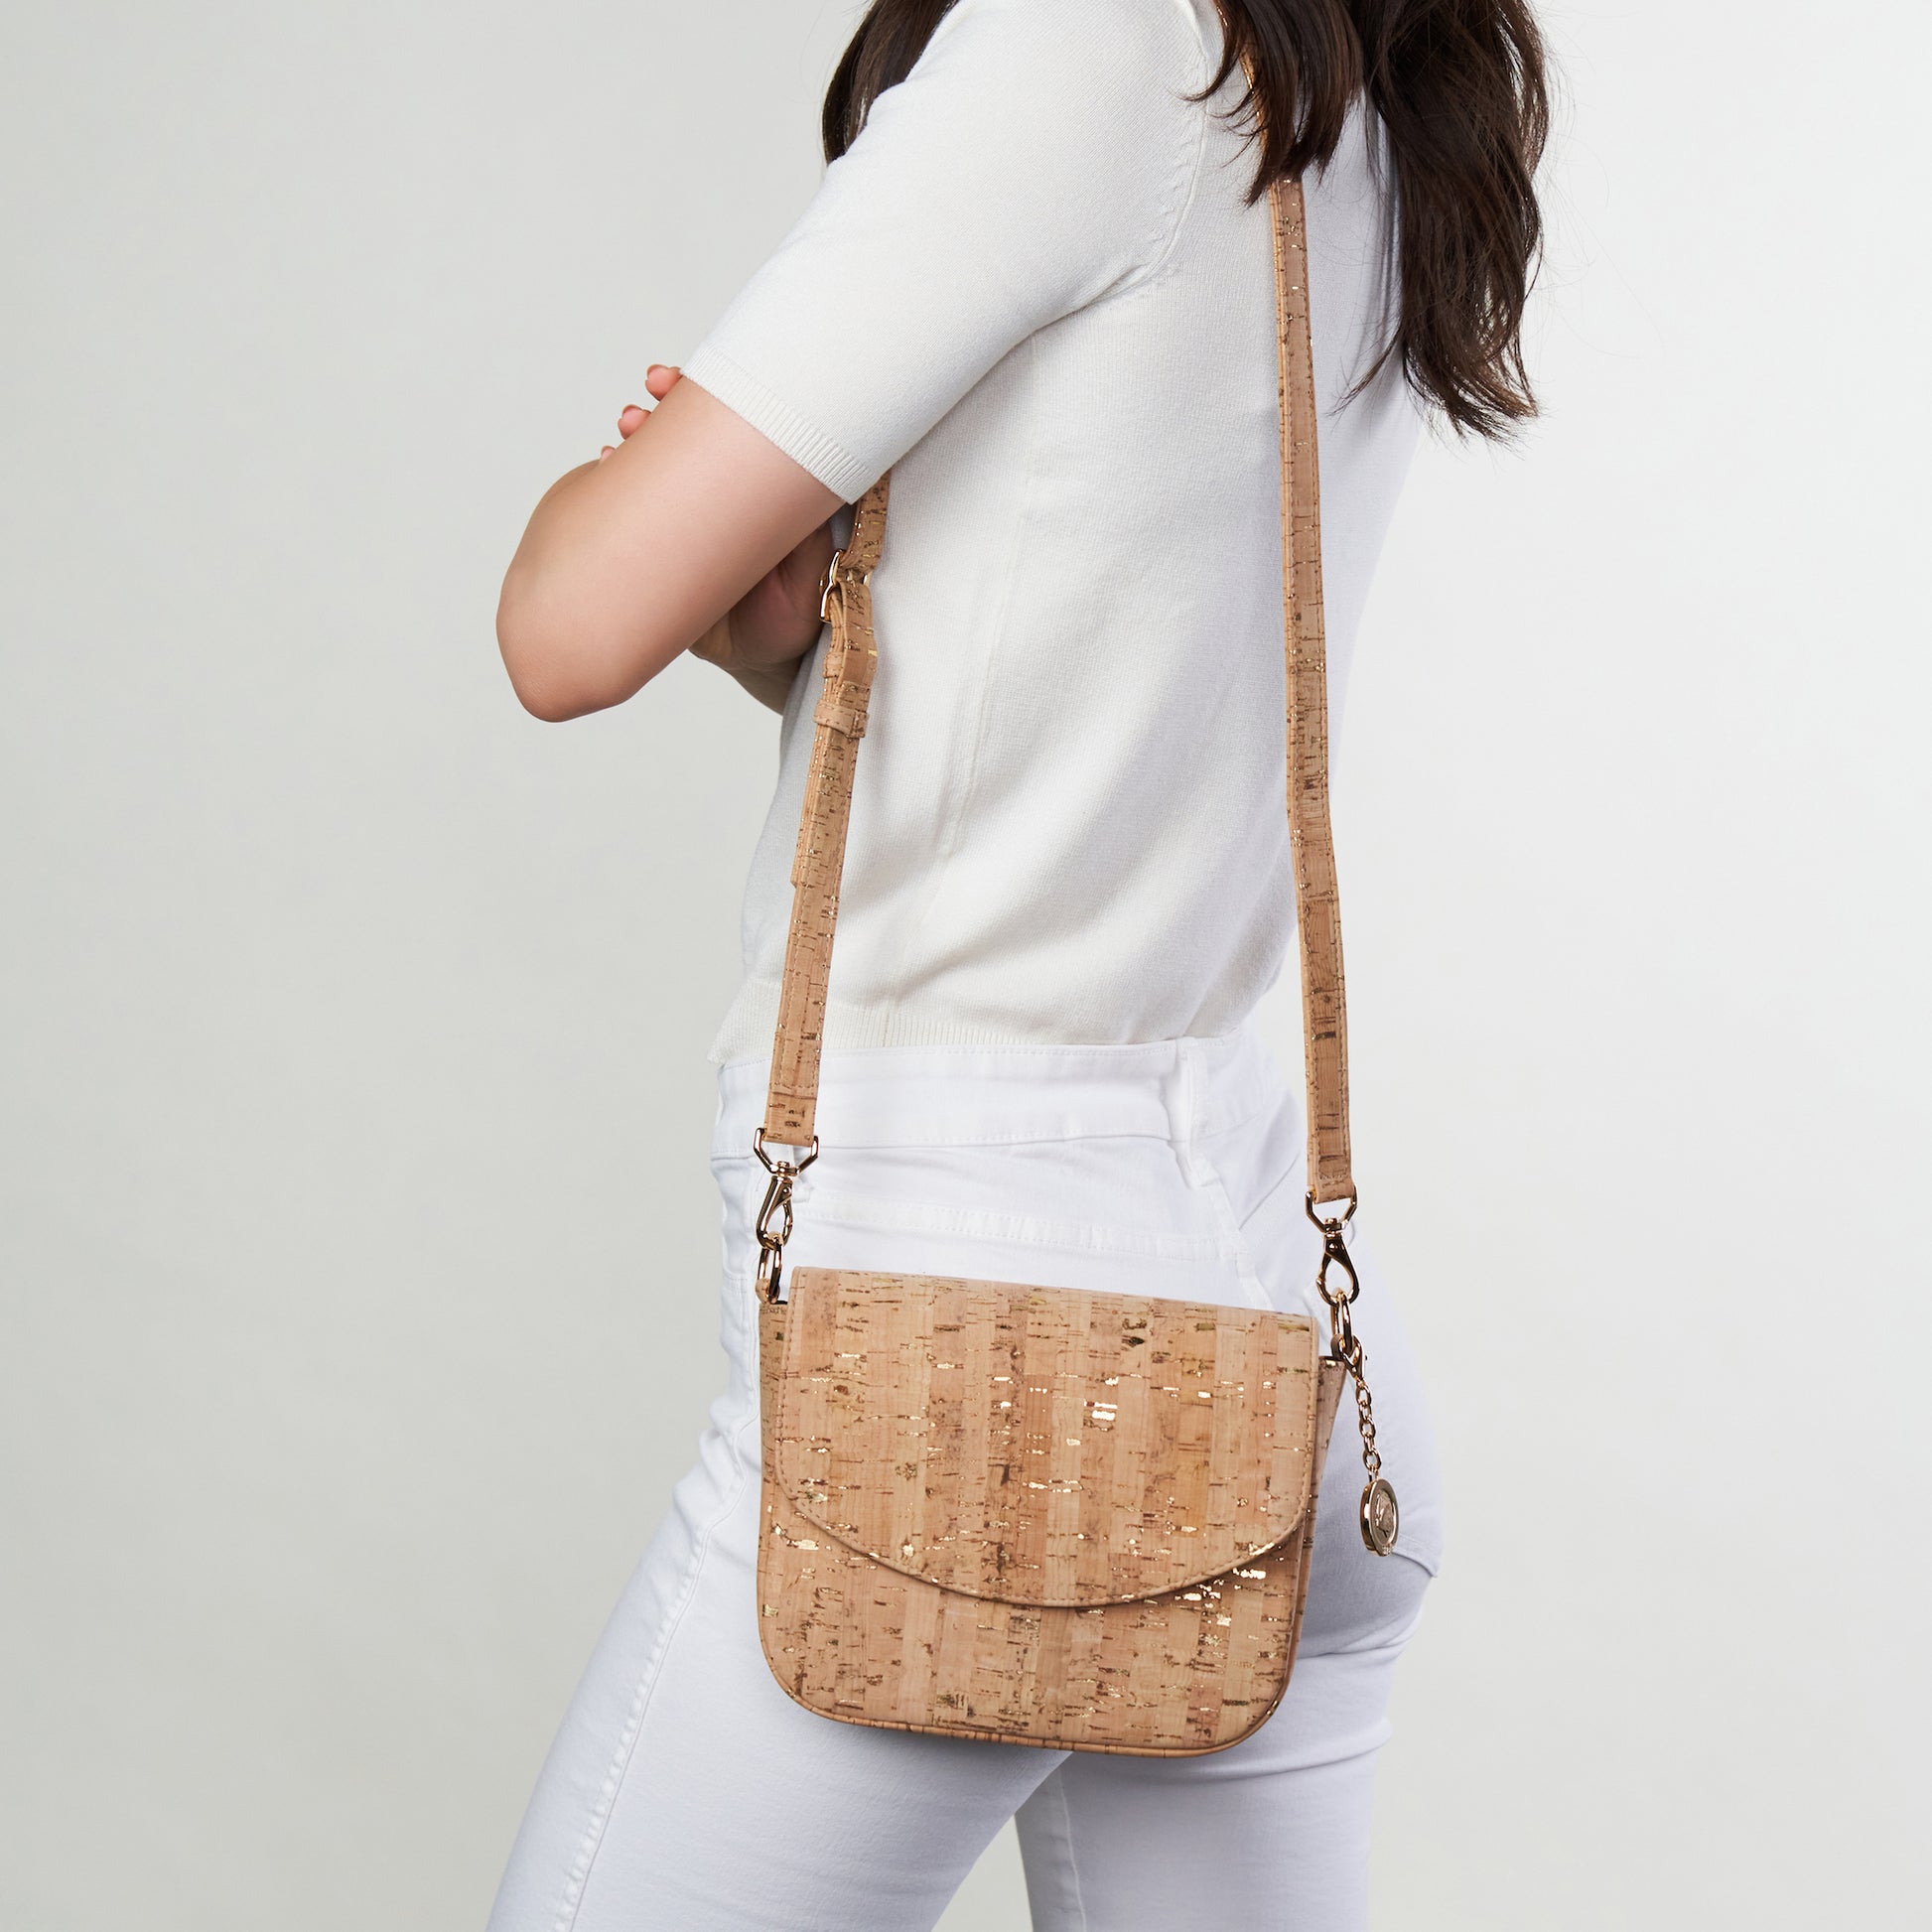 Chic Crossbody Bag for Women BAGF-058 – CORKADIA